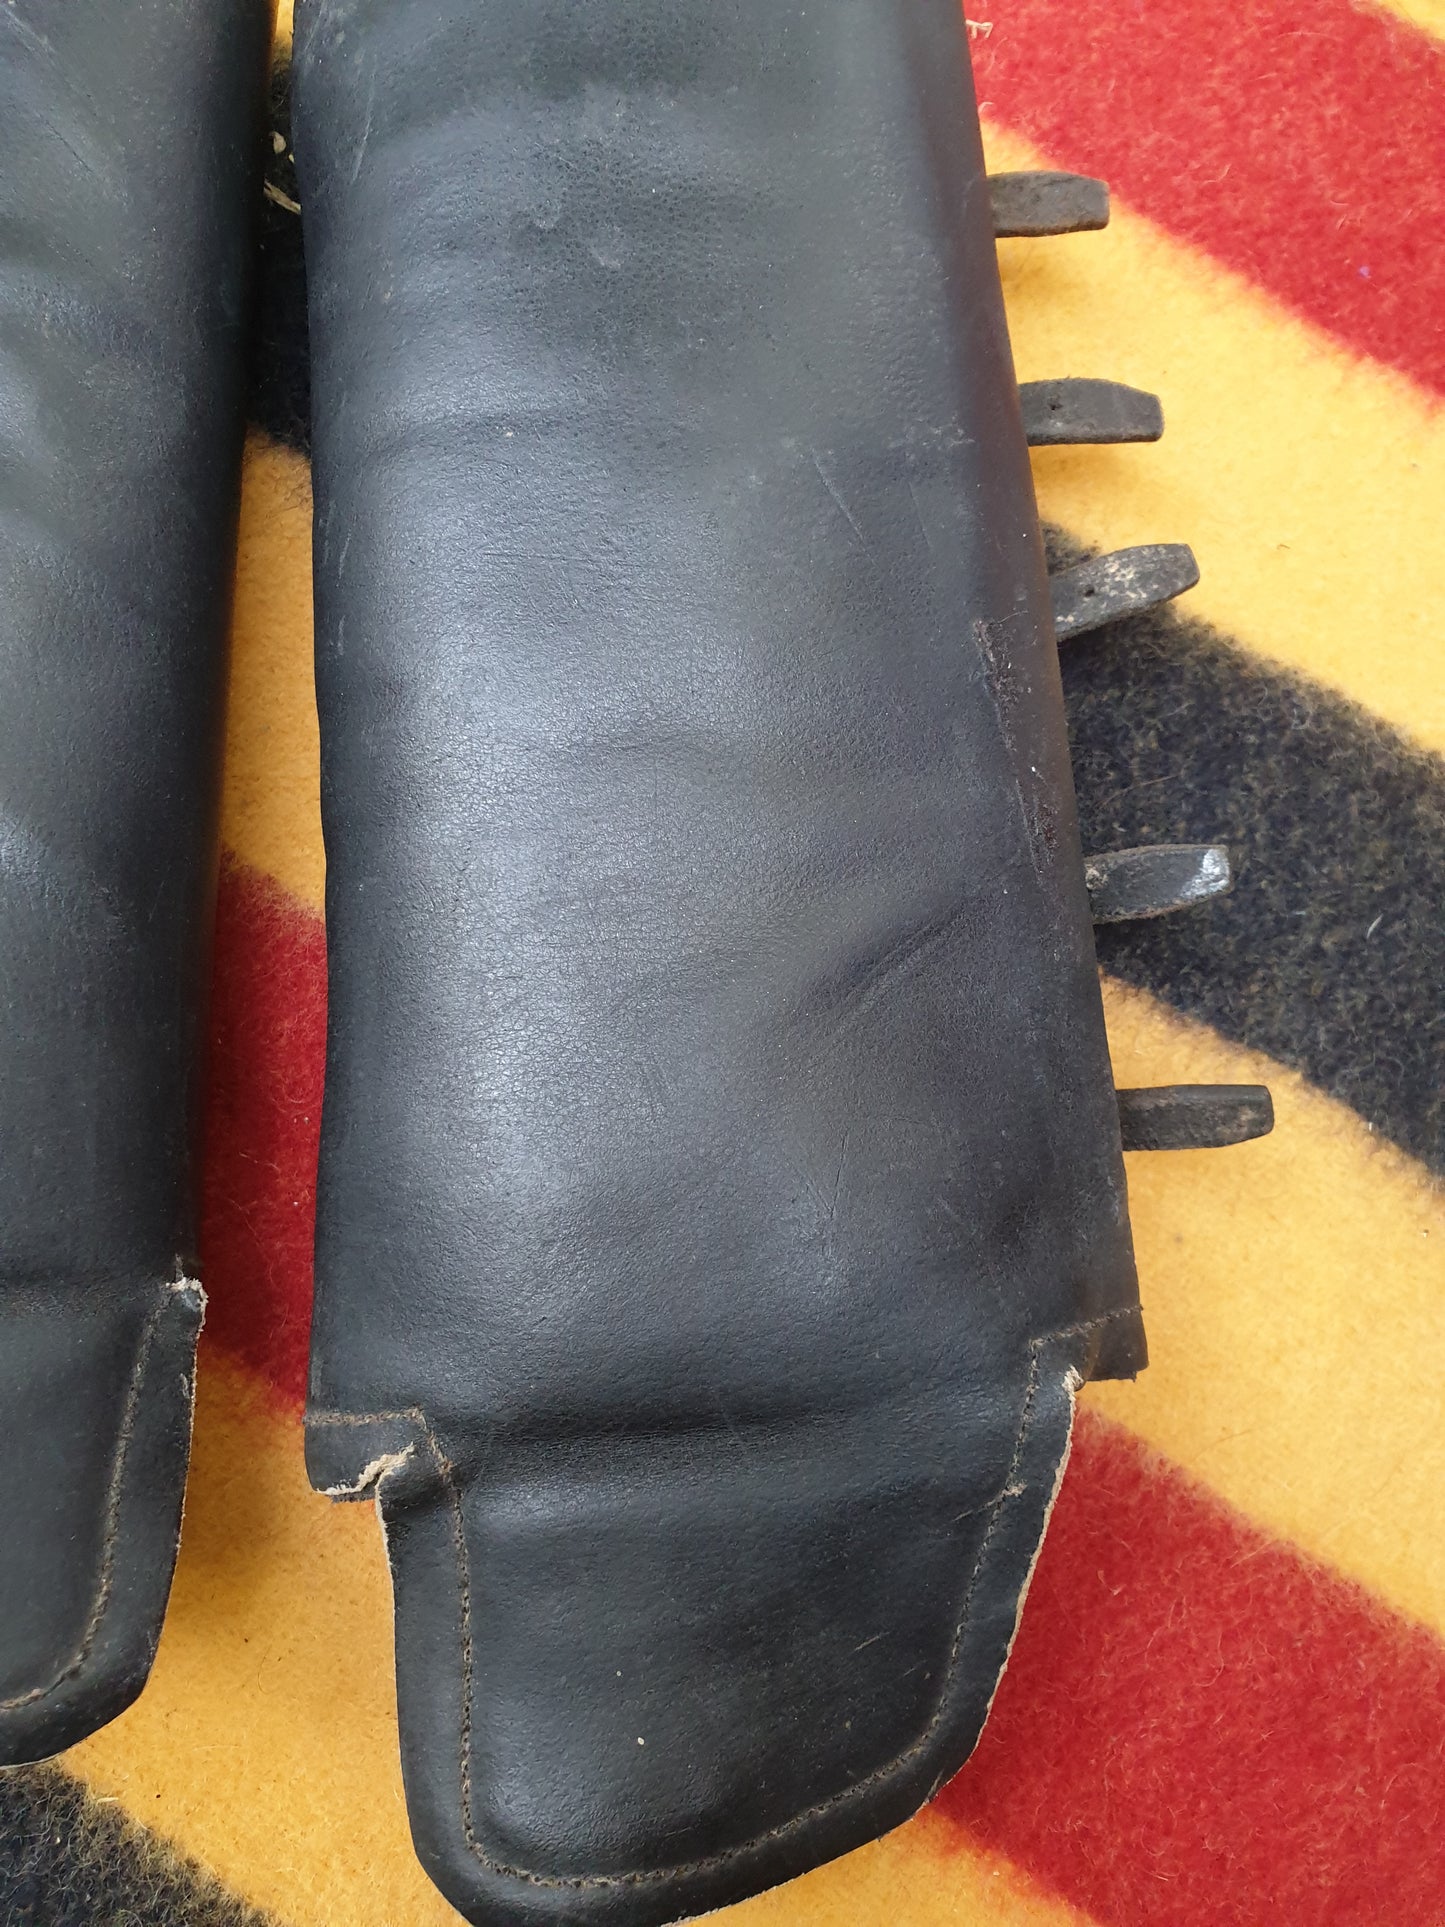 Used black leather full size brushing boots FREE POSTAGE☆